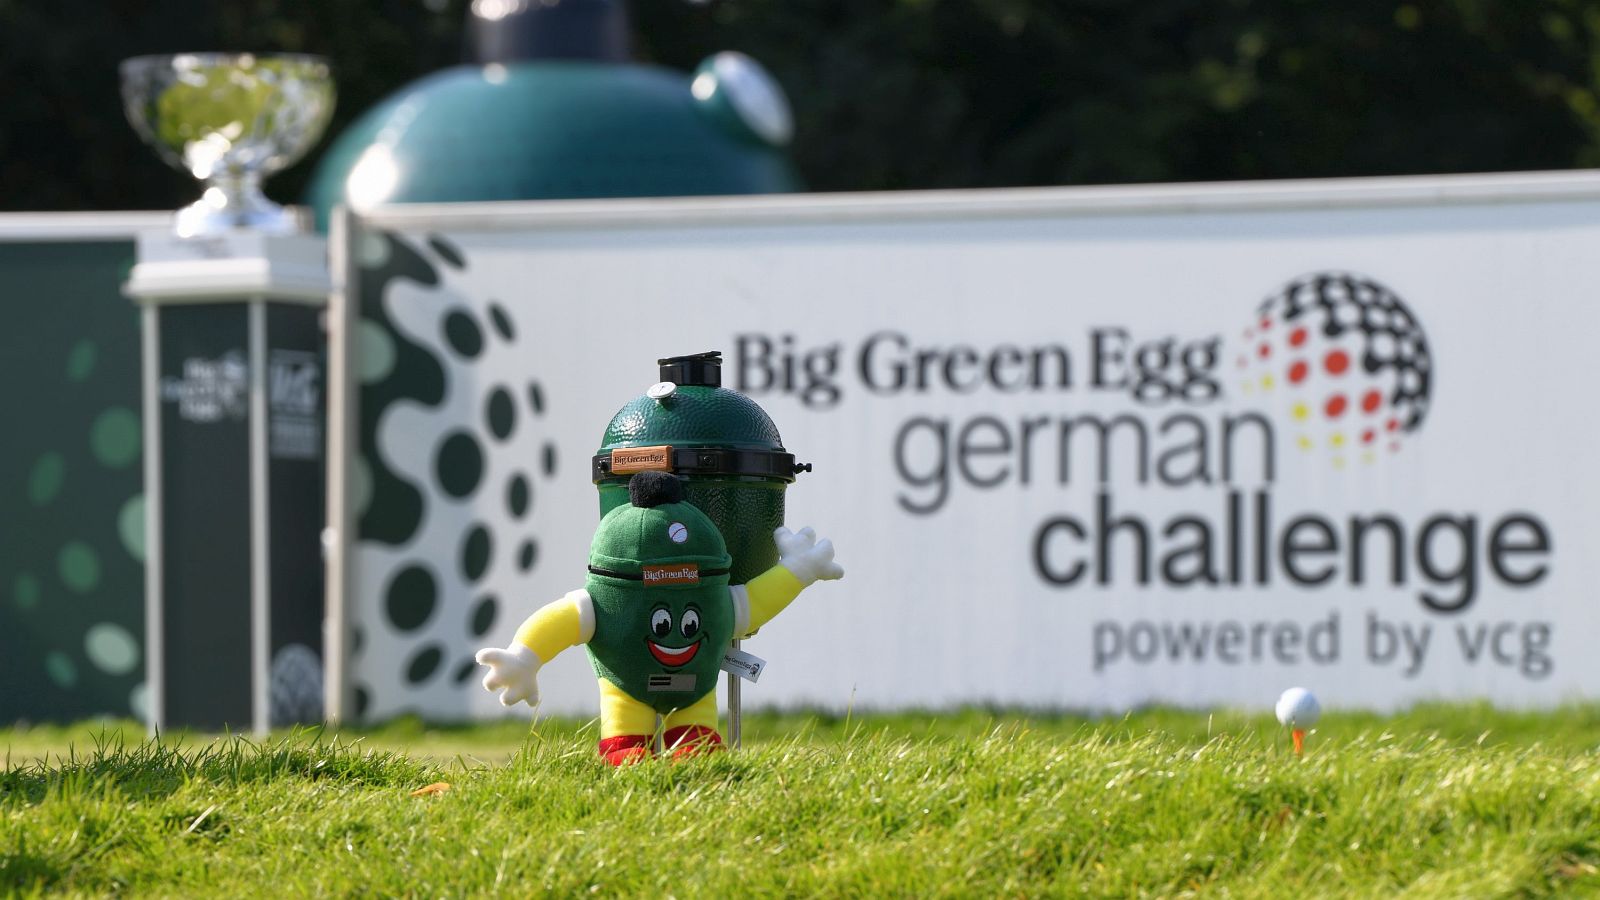 Maskottchen, Pokal, Banner - bei der Big Green Egg German Challenge powered by VcG ging's bunt zu. © DGS/Frank Foehlinger